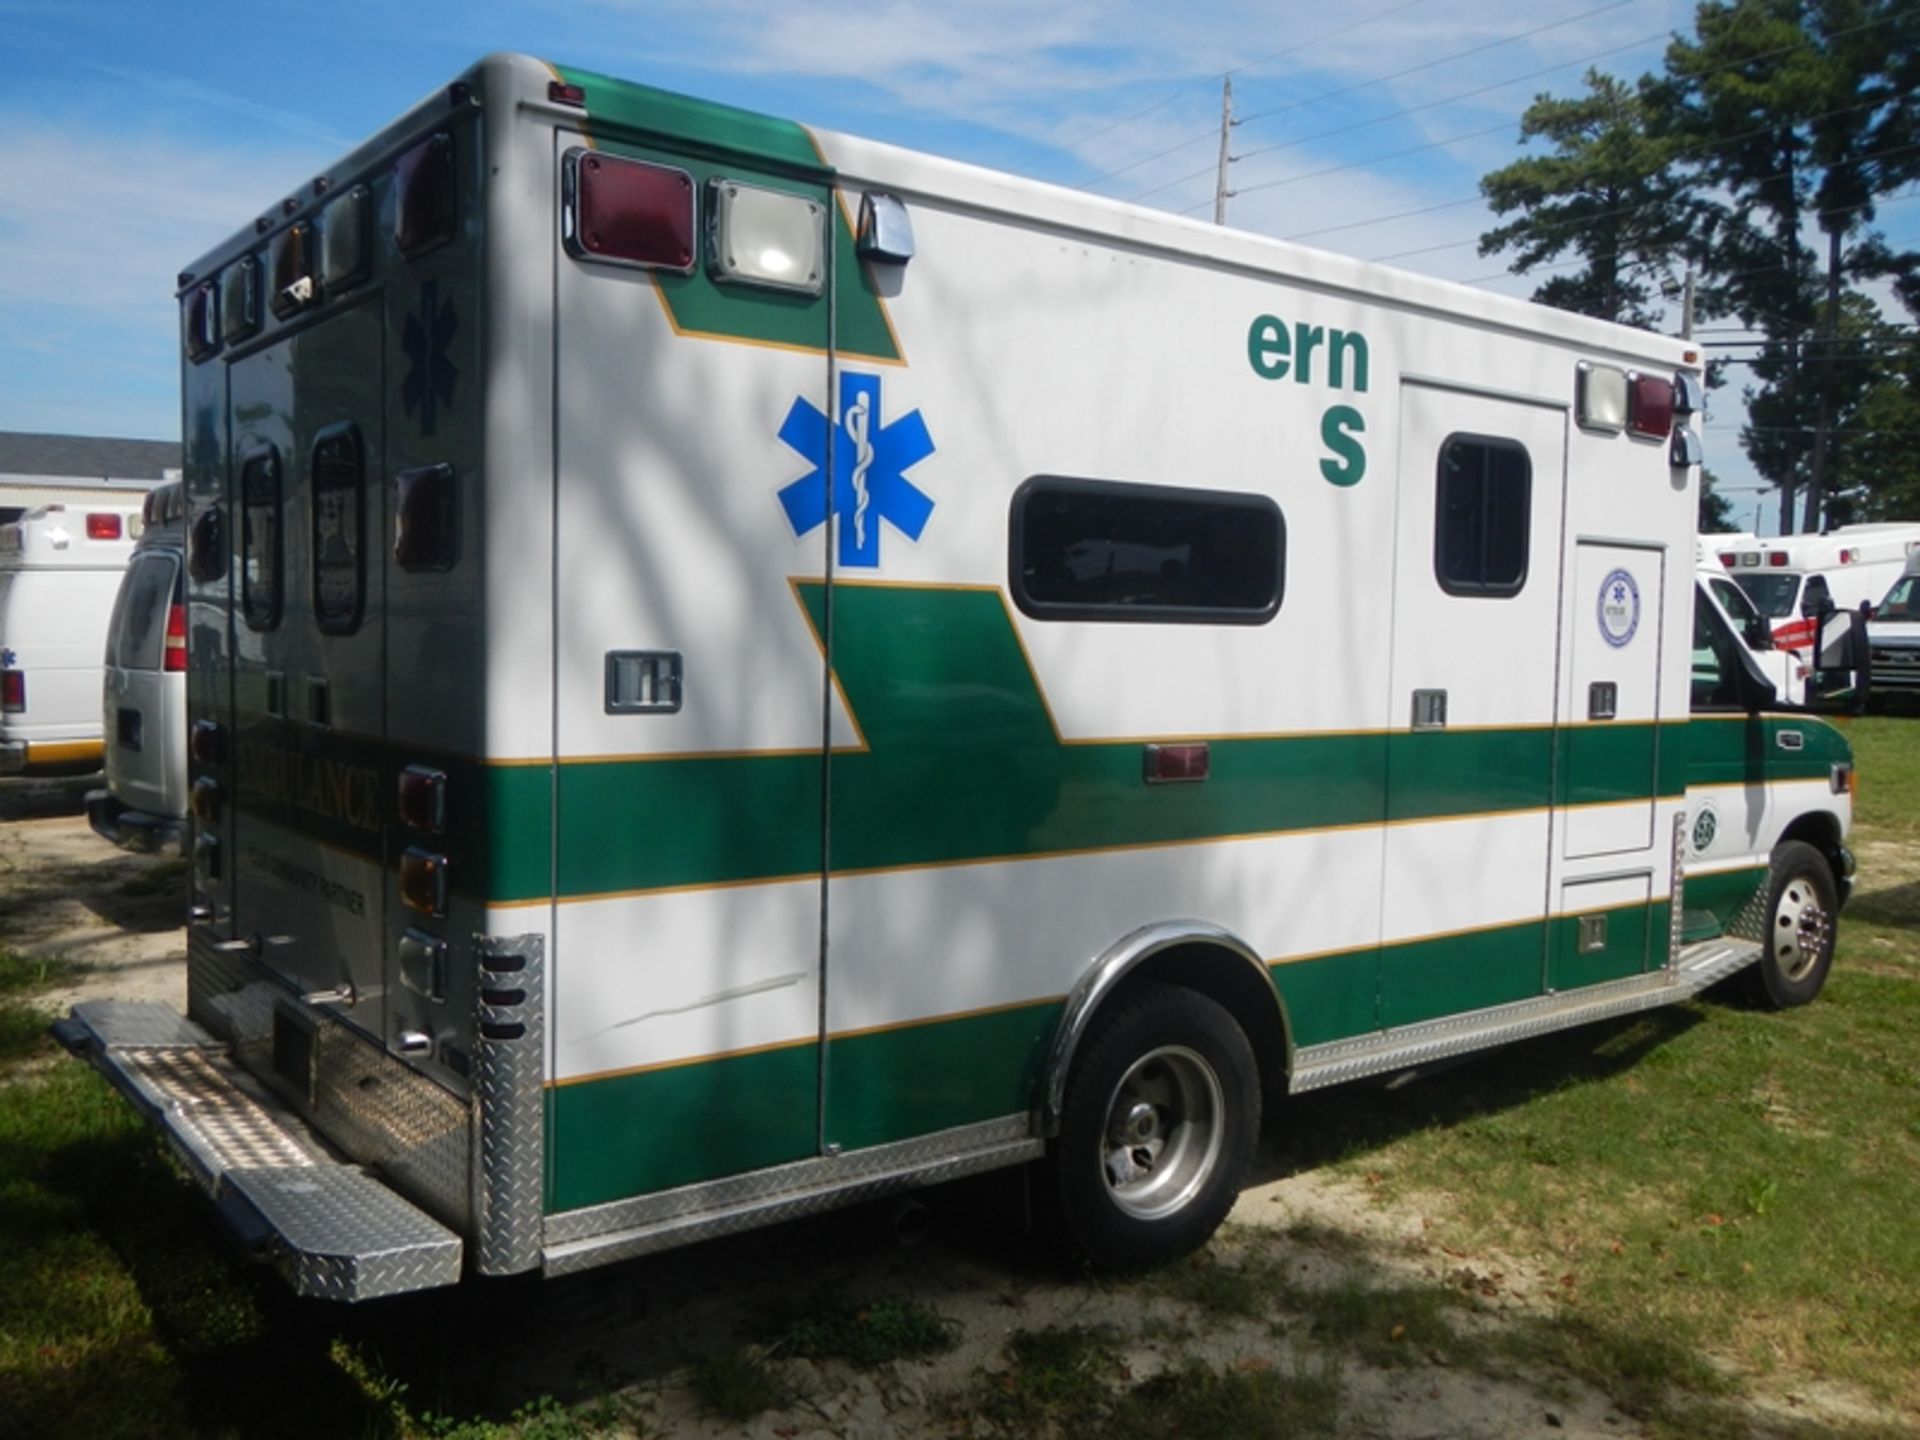 2003 FORD E-450 Type III Ambulance, dsl 138,820 miles - 1FDXE45F03HB76343 - Image 3 of 6